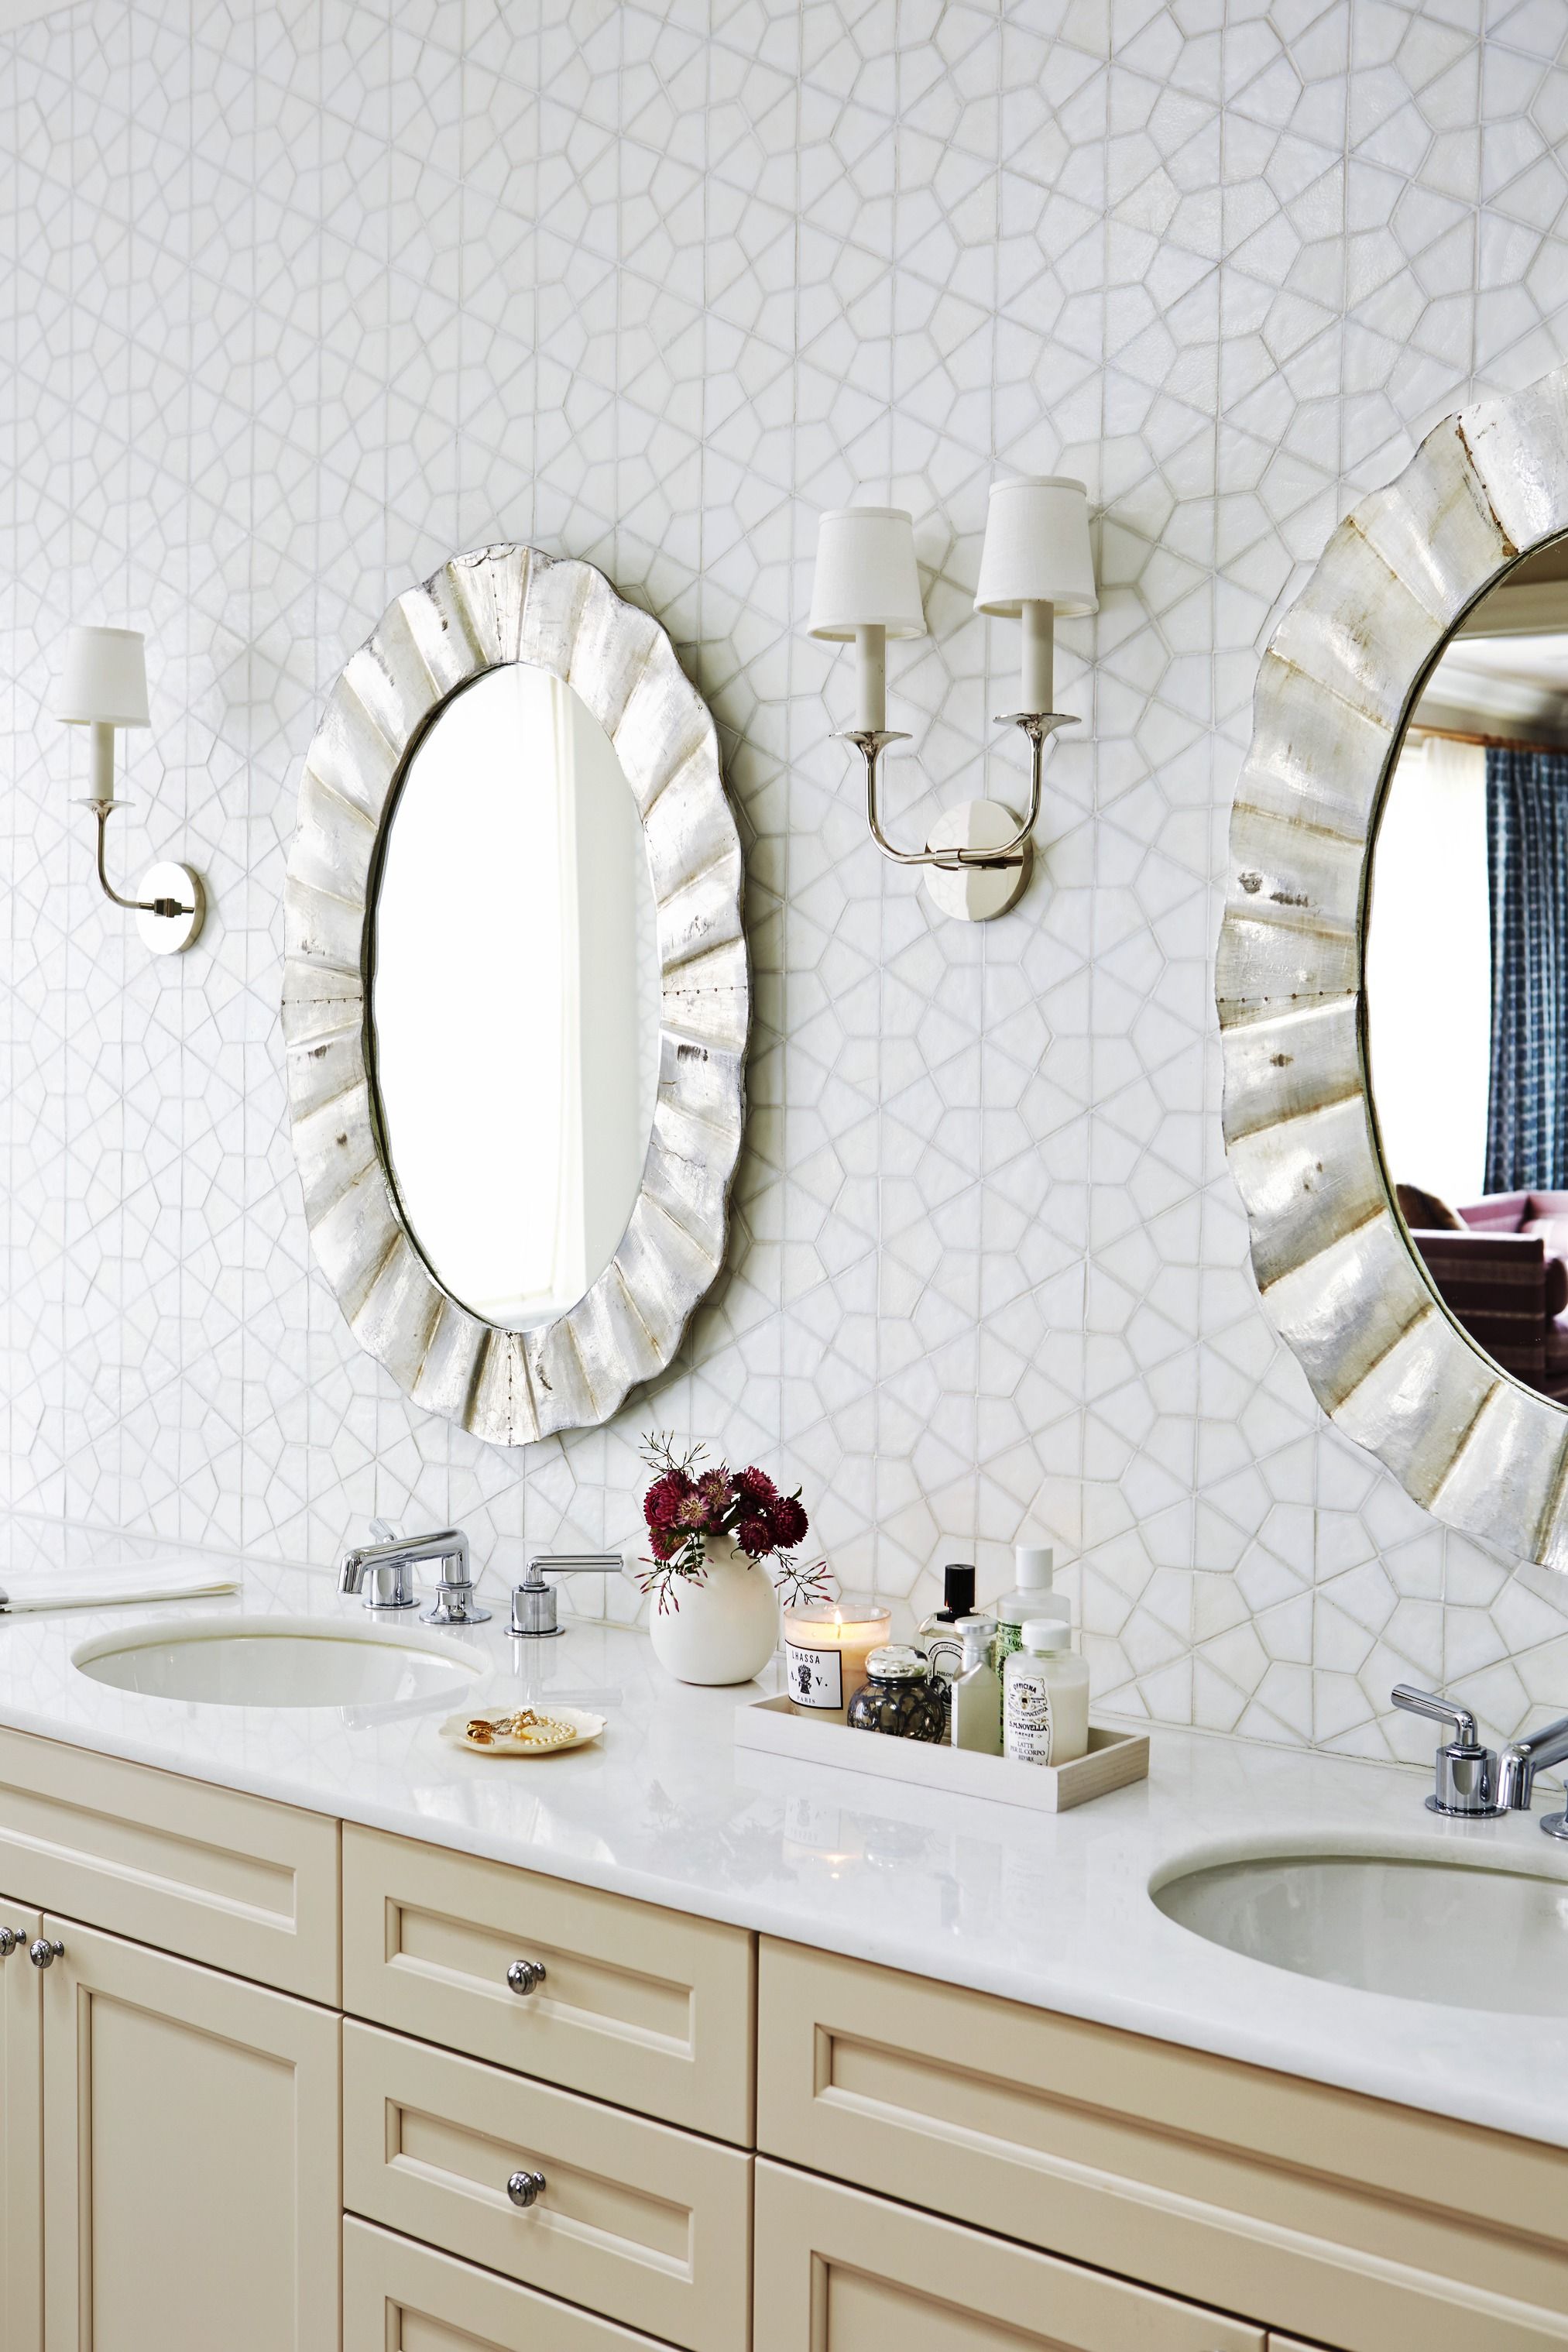 65 Bathroom Decorating Ideas - Pictures of Bathroom Decor and Designs